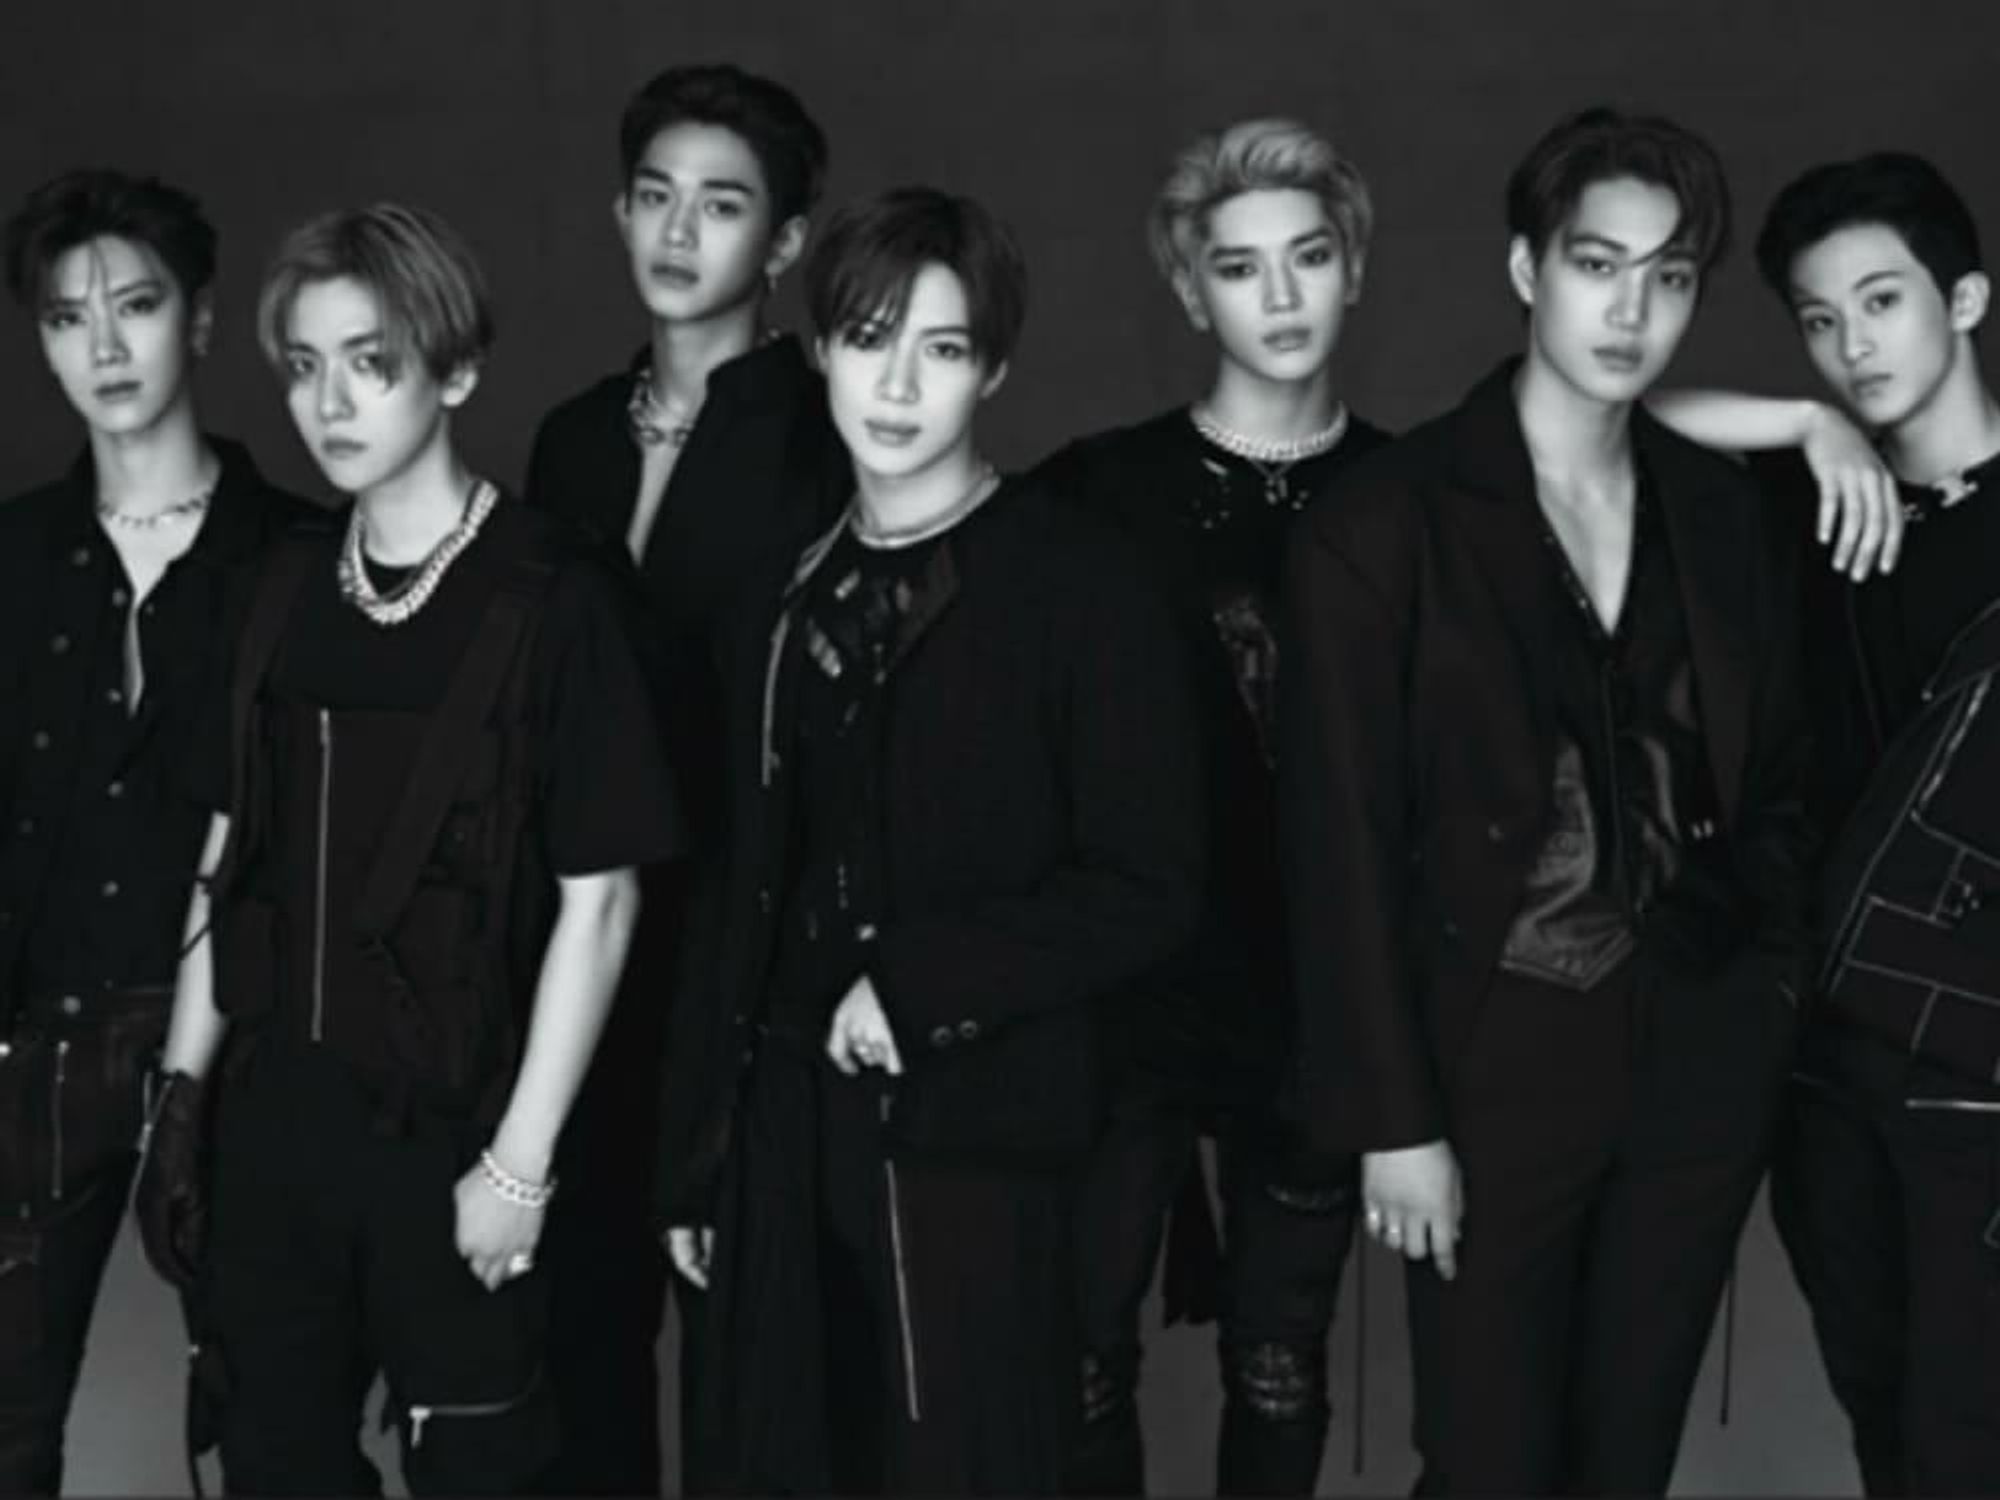 K-pop group SuperM